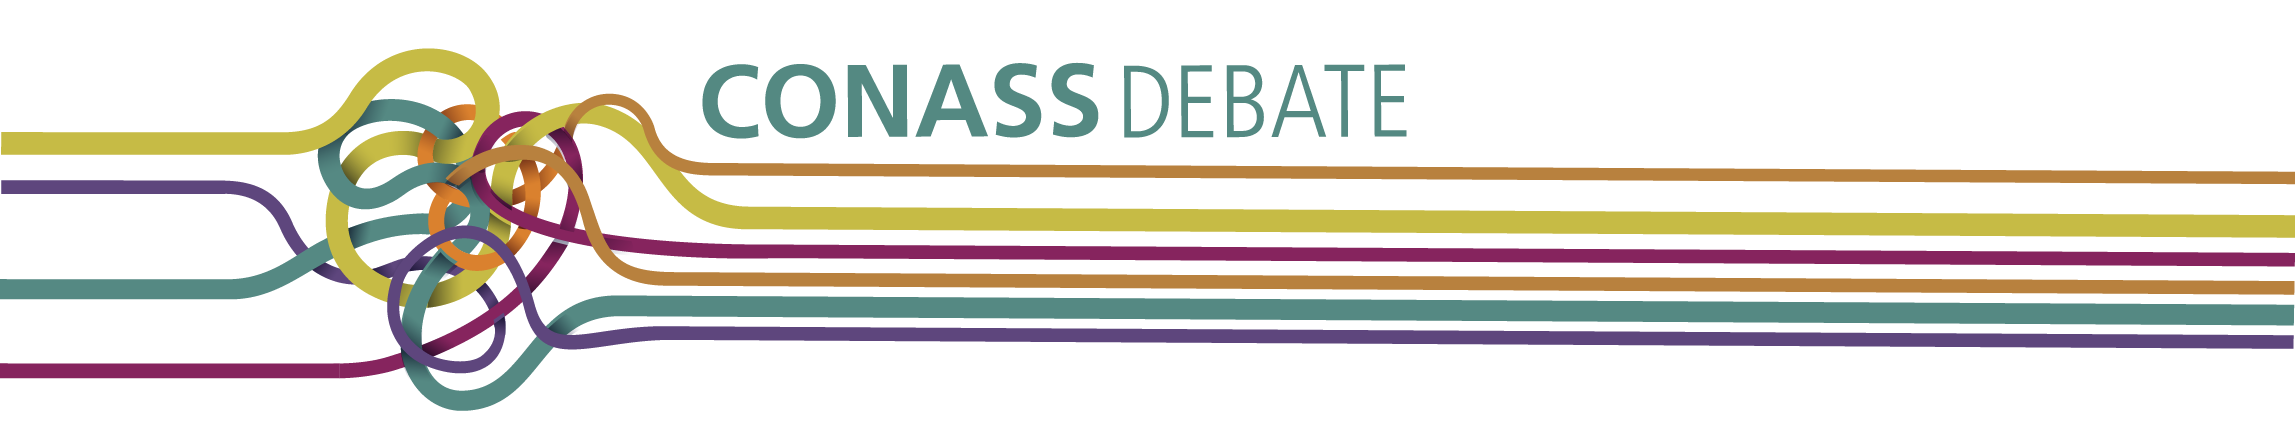 conass-debate-logo-01